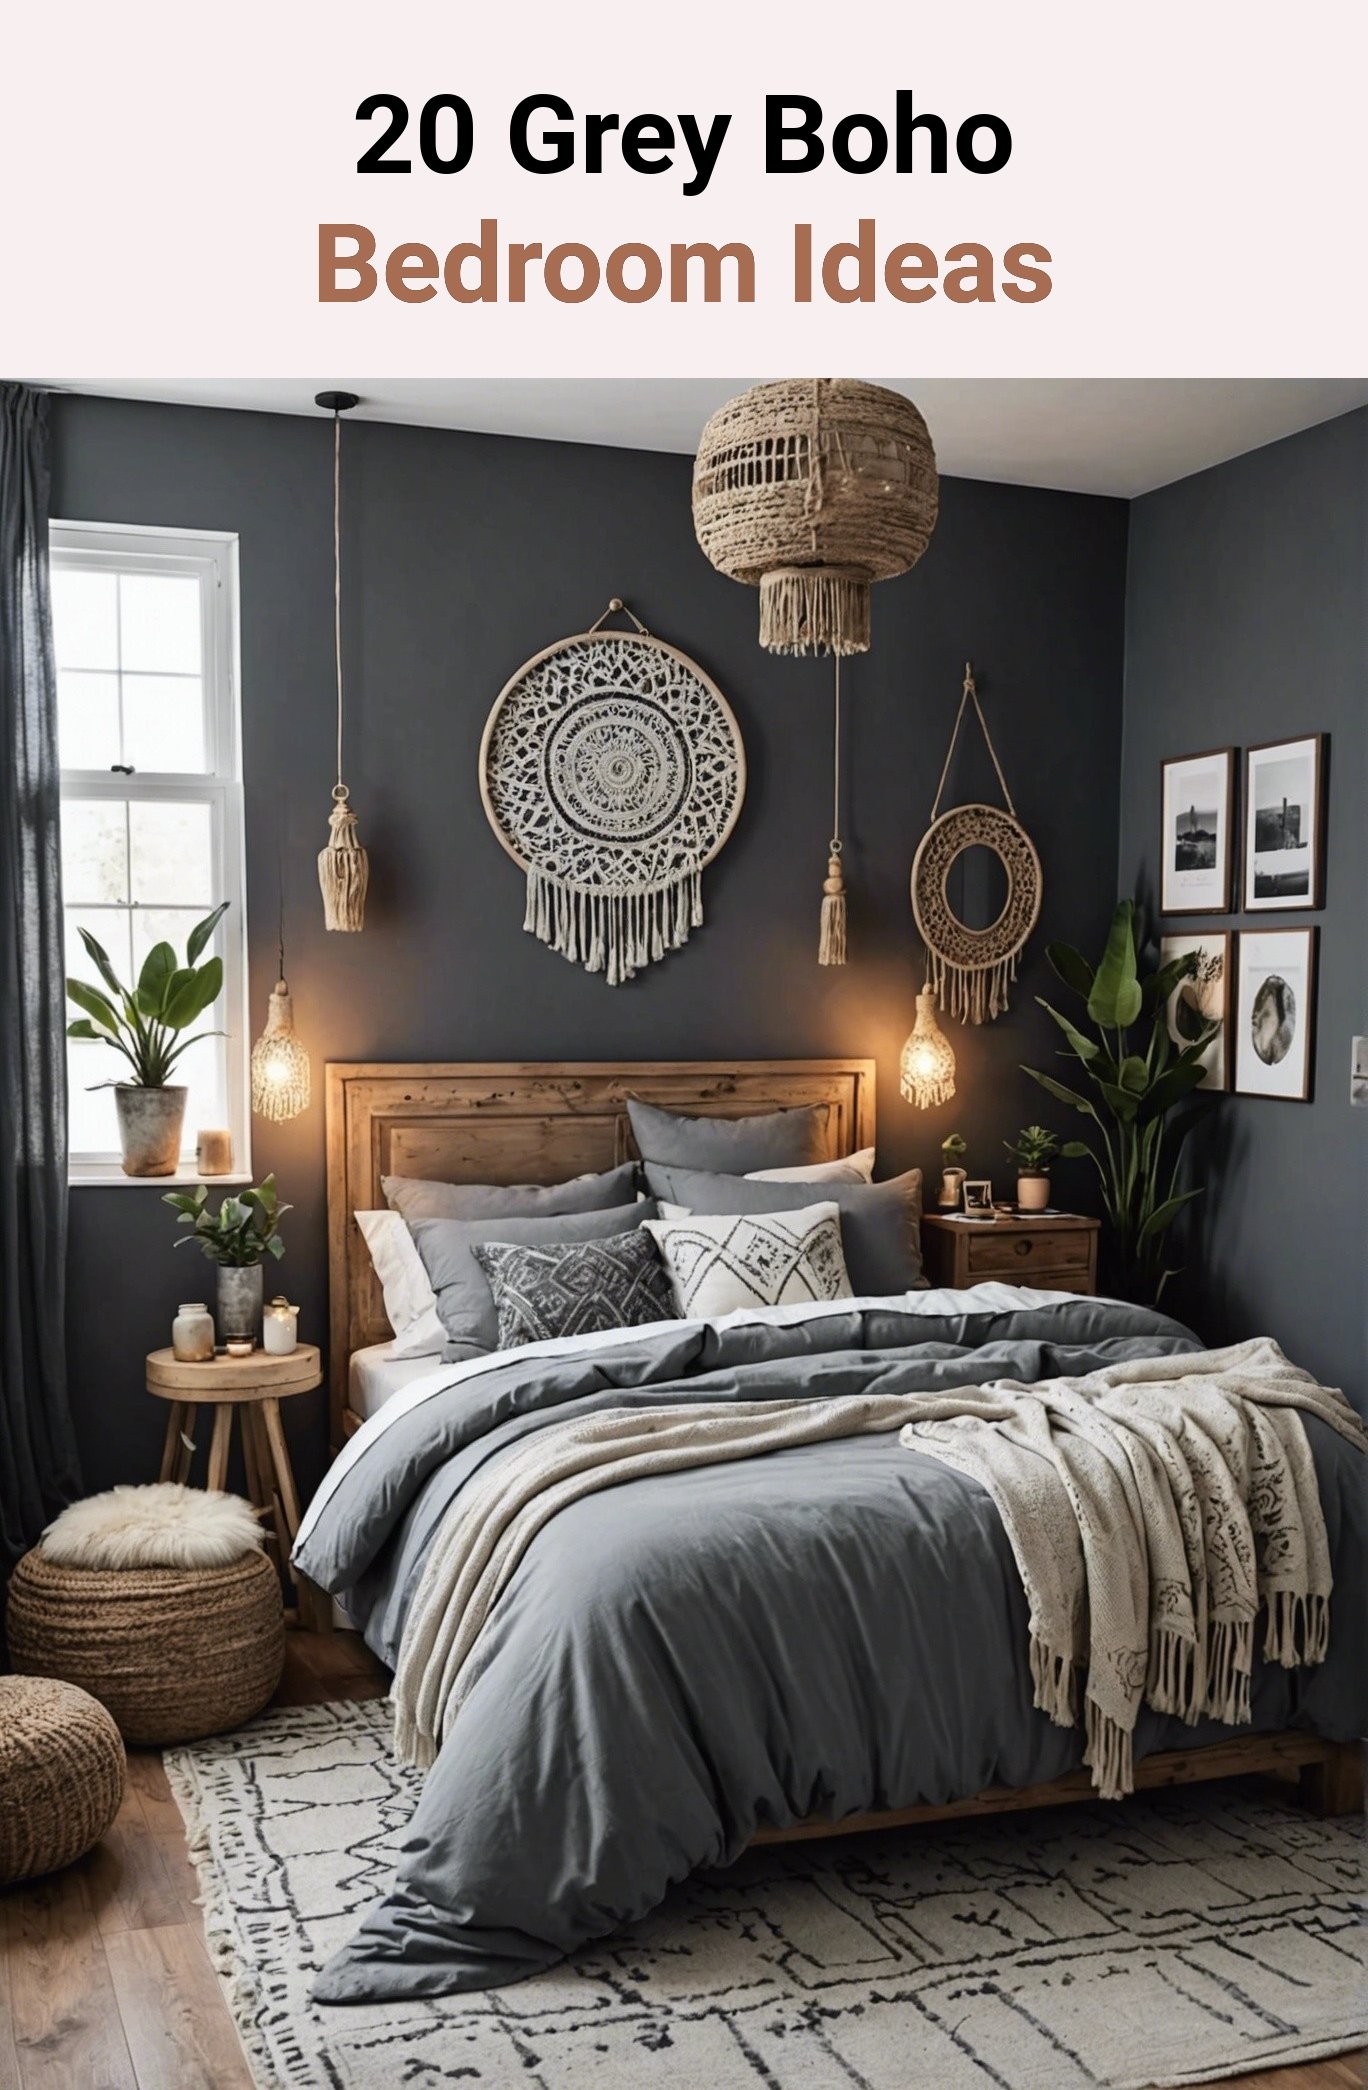 20 Grey Boho Bedroom Ideas